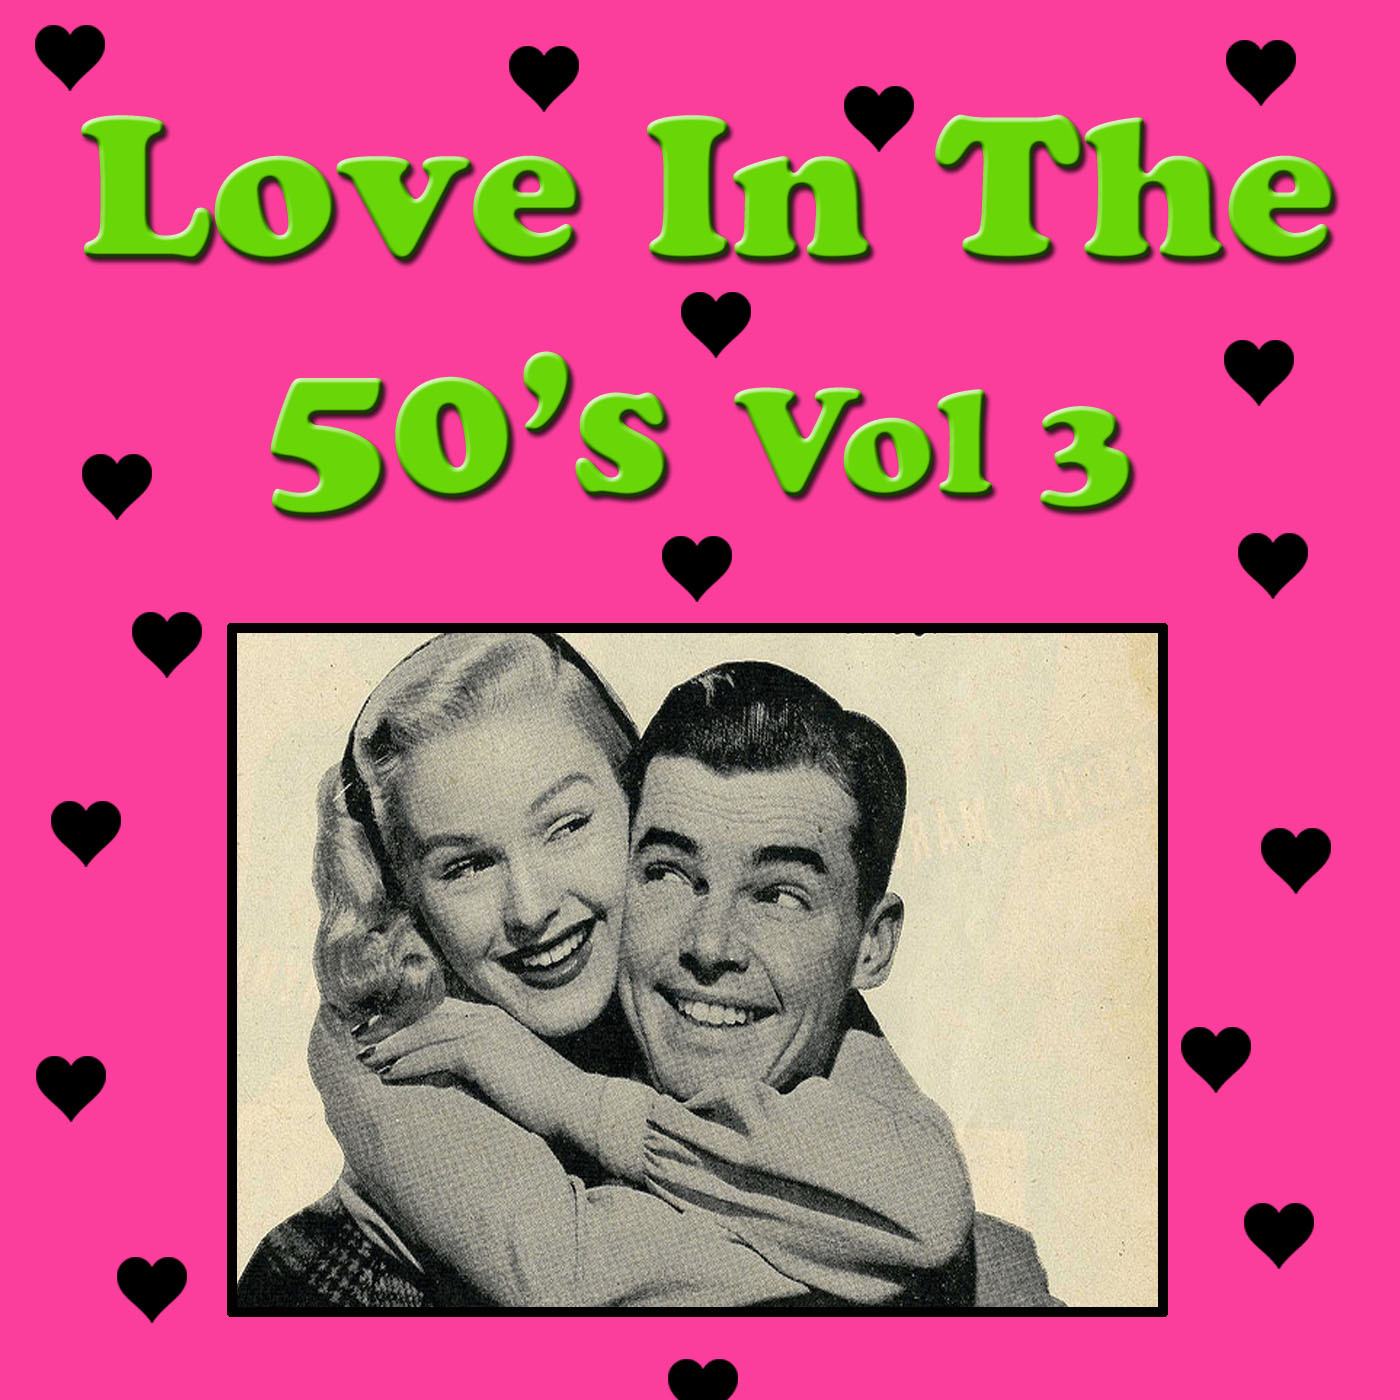 Love in the 50's, Vol. 3